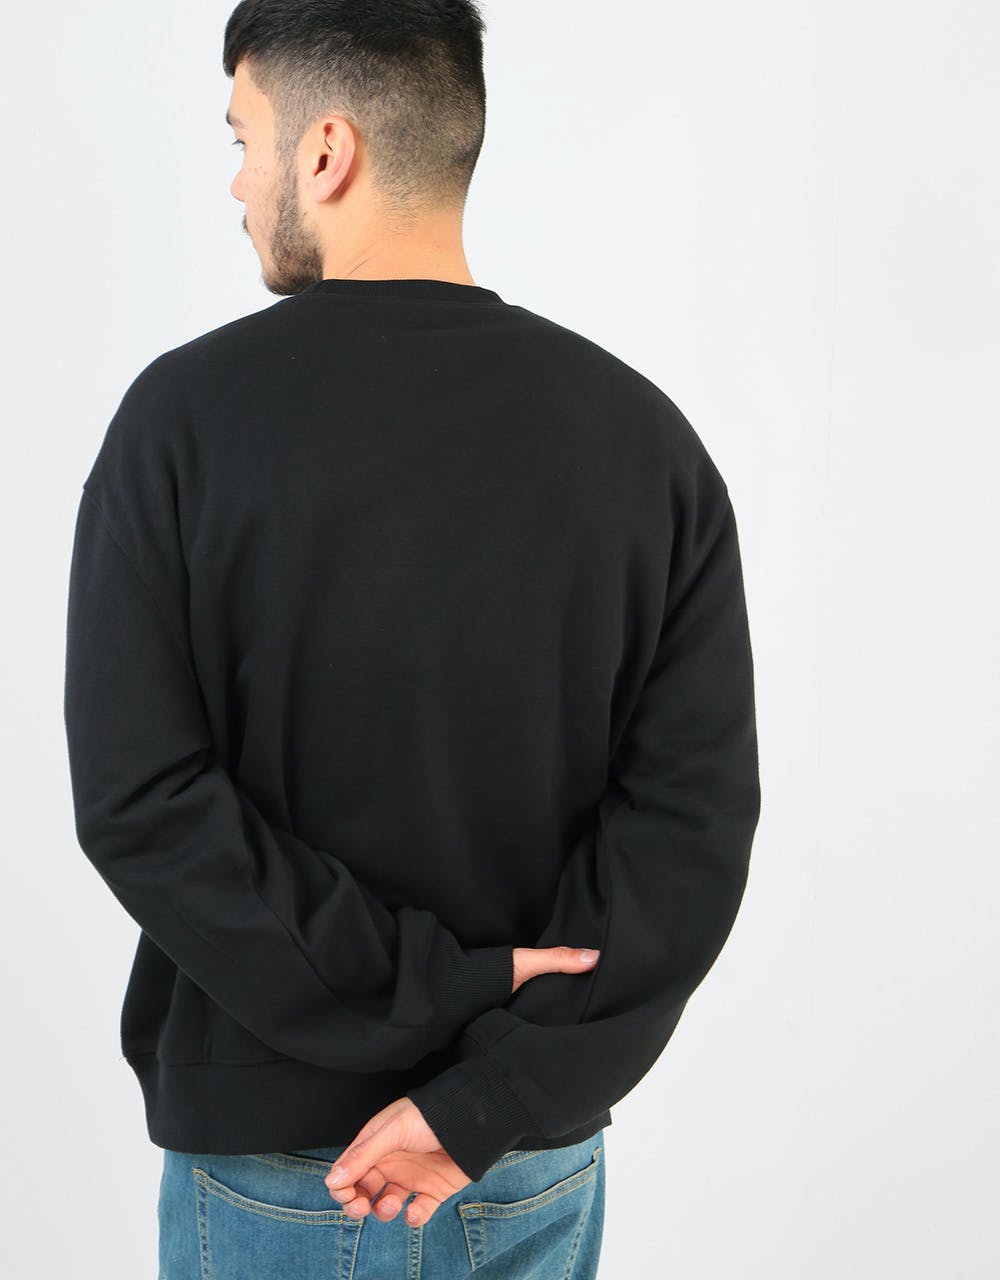 Carhartt WIP Logo Sweatshirt - Black/White